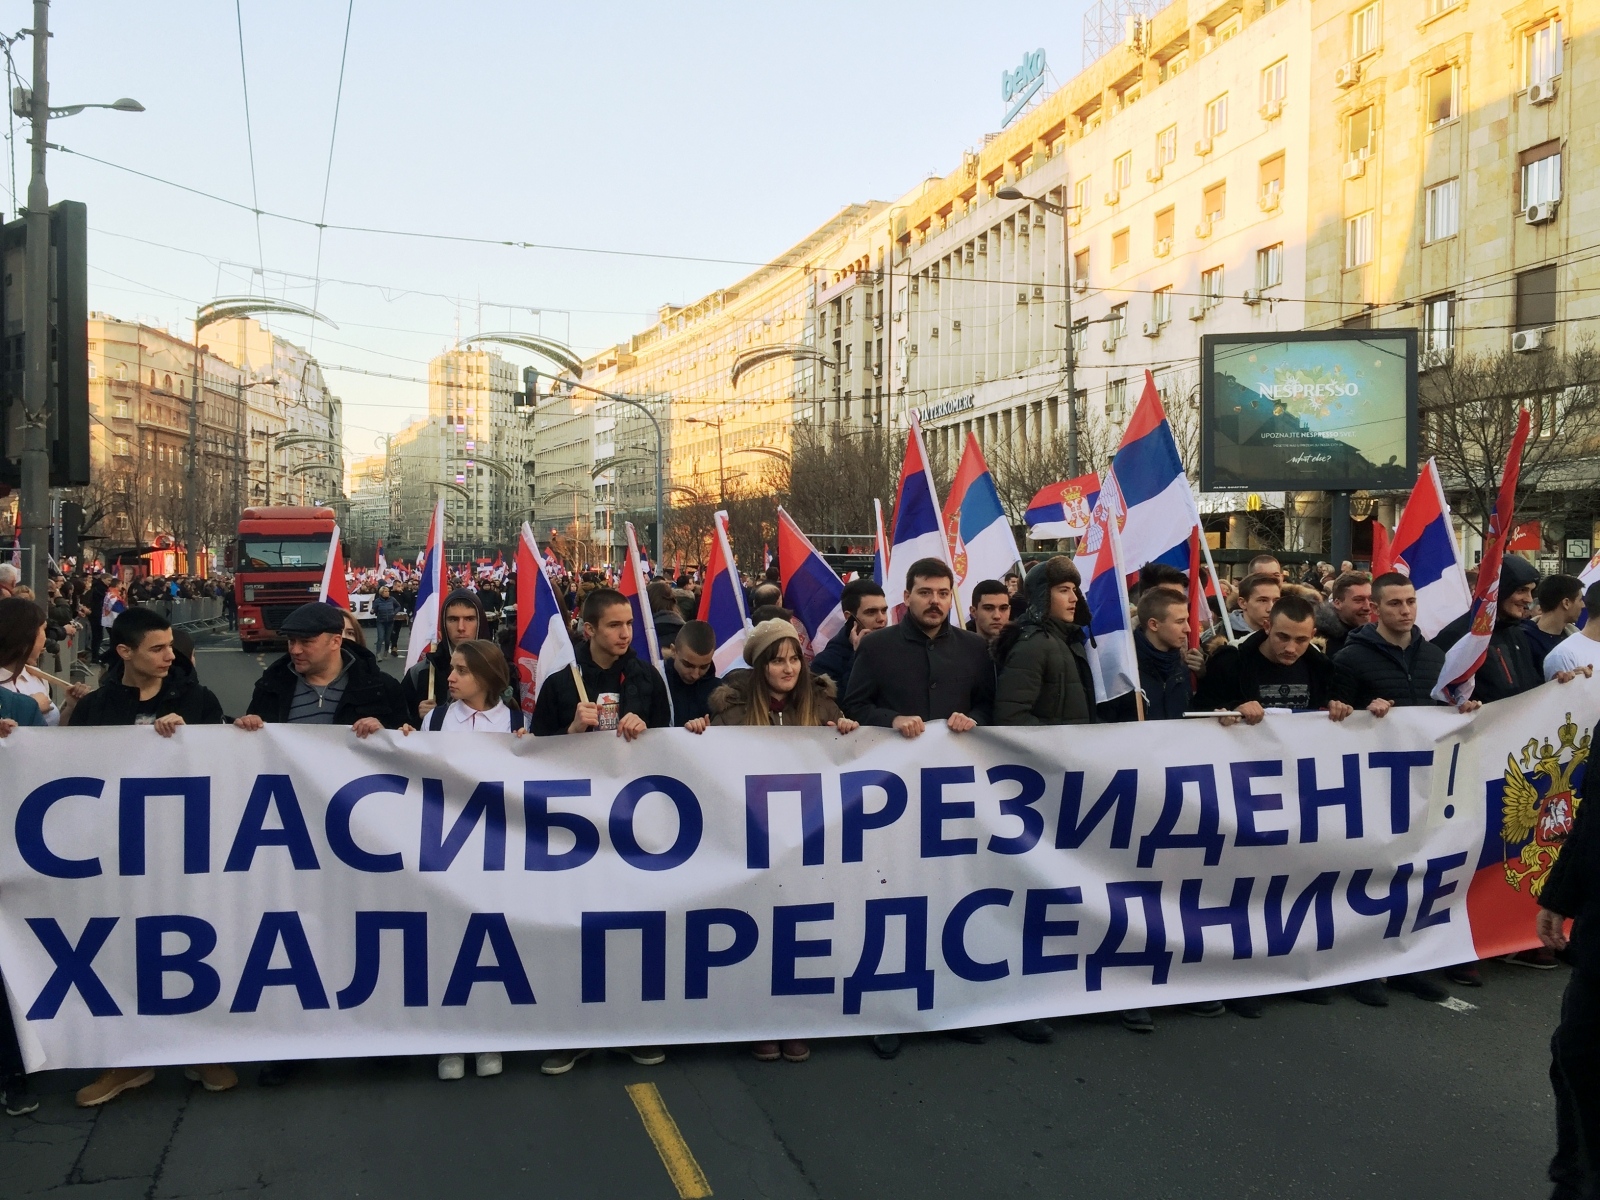 Zahvala Putinu - januar 2019, Beograd Vir:Pixsell 